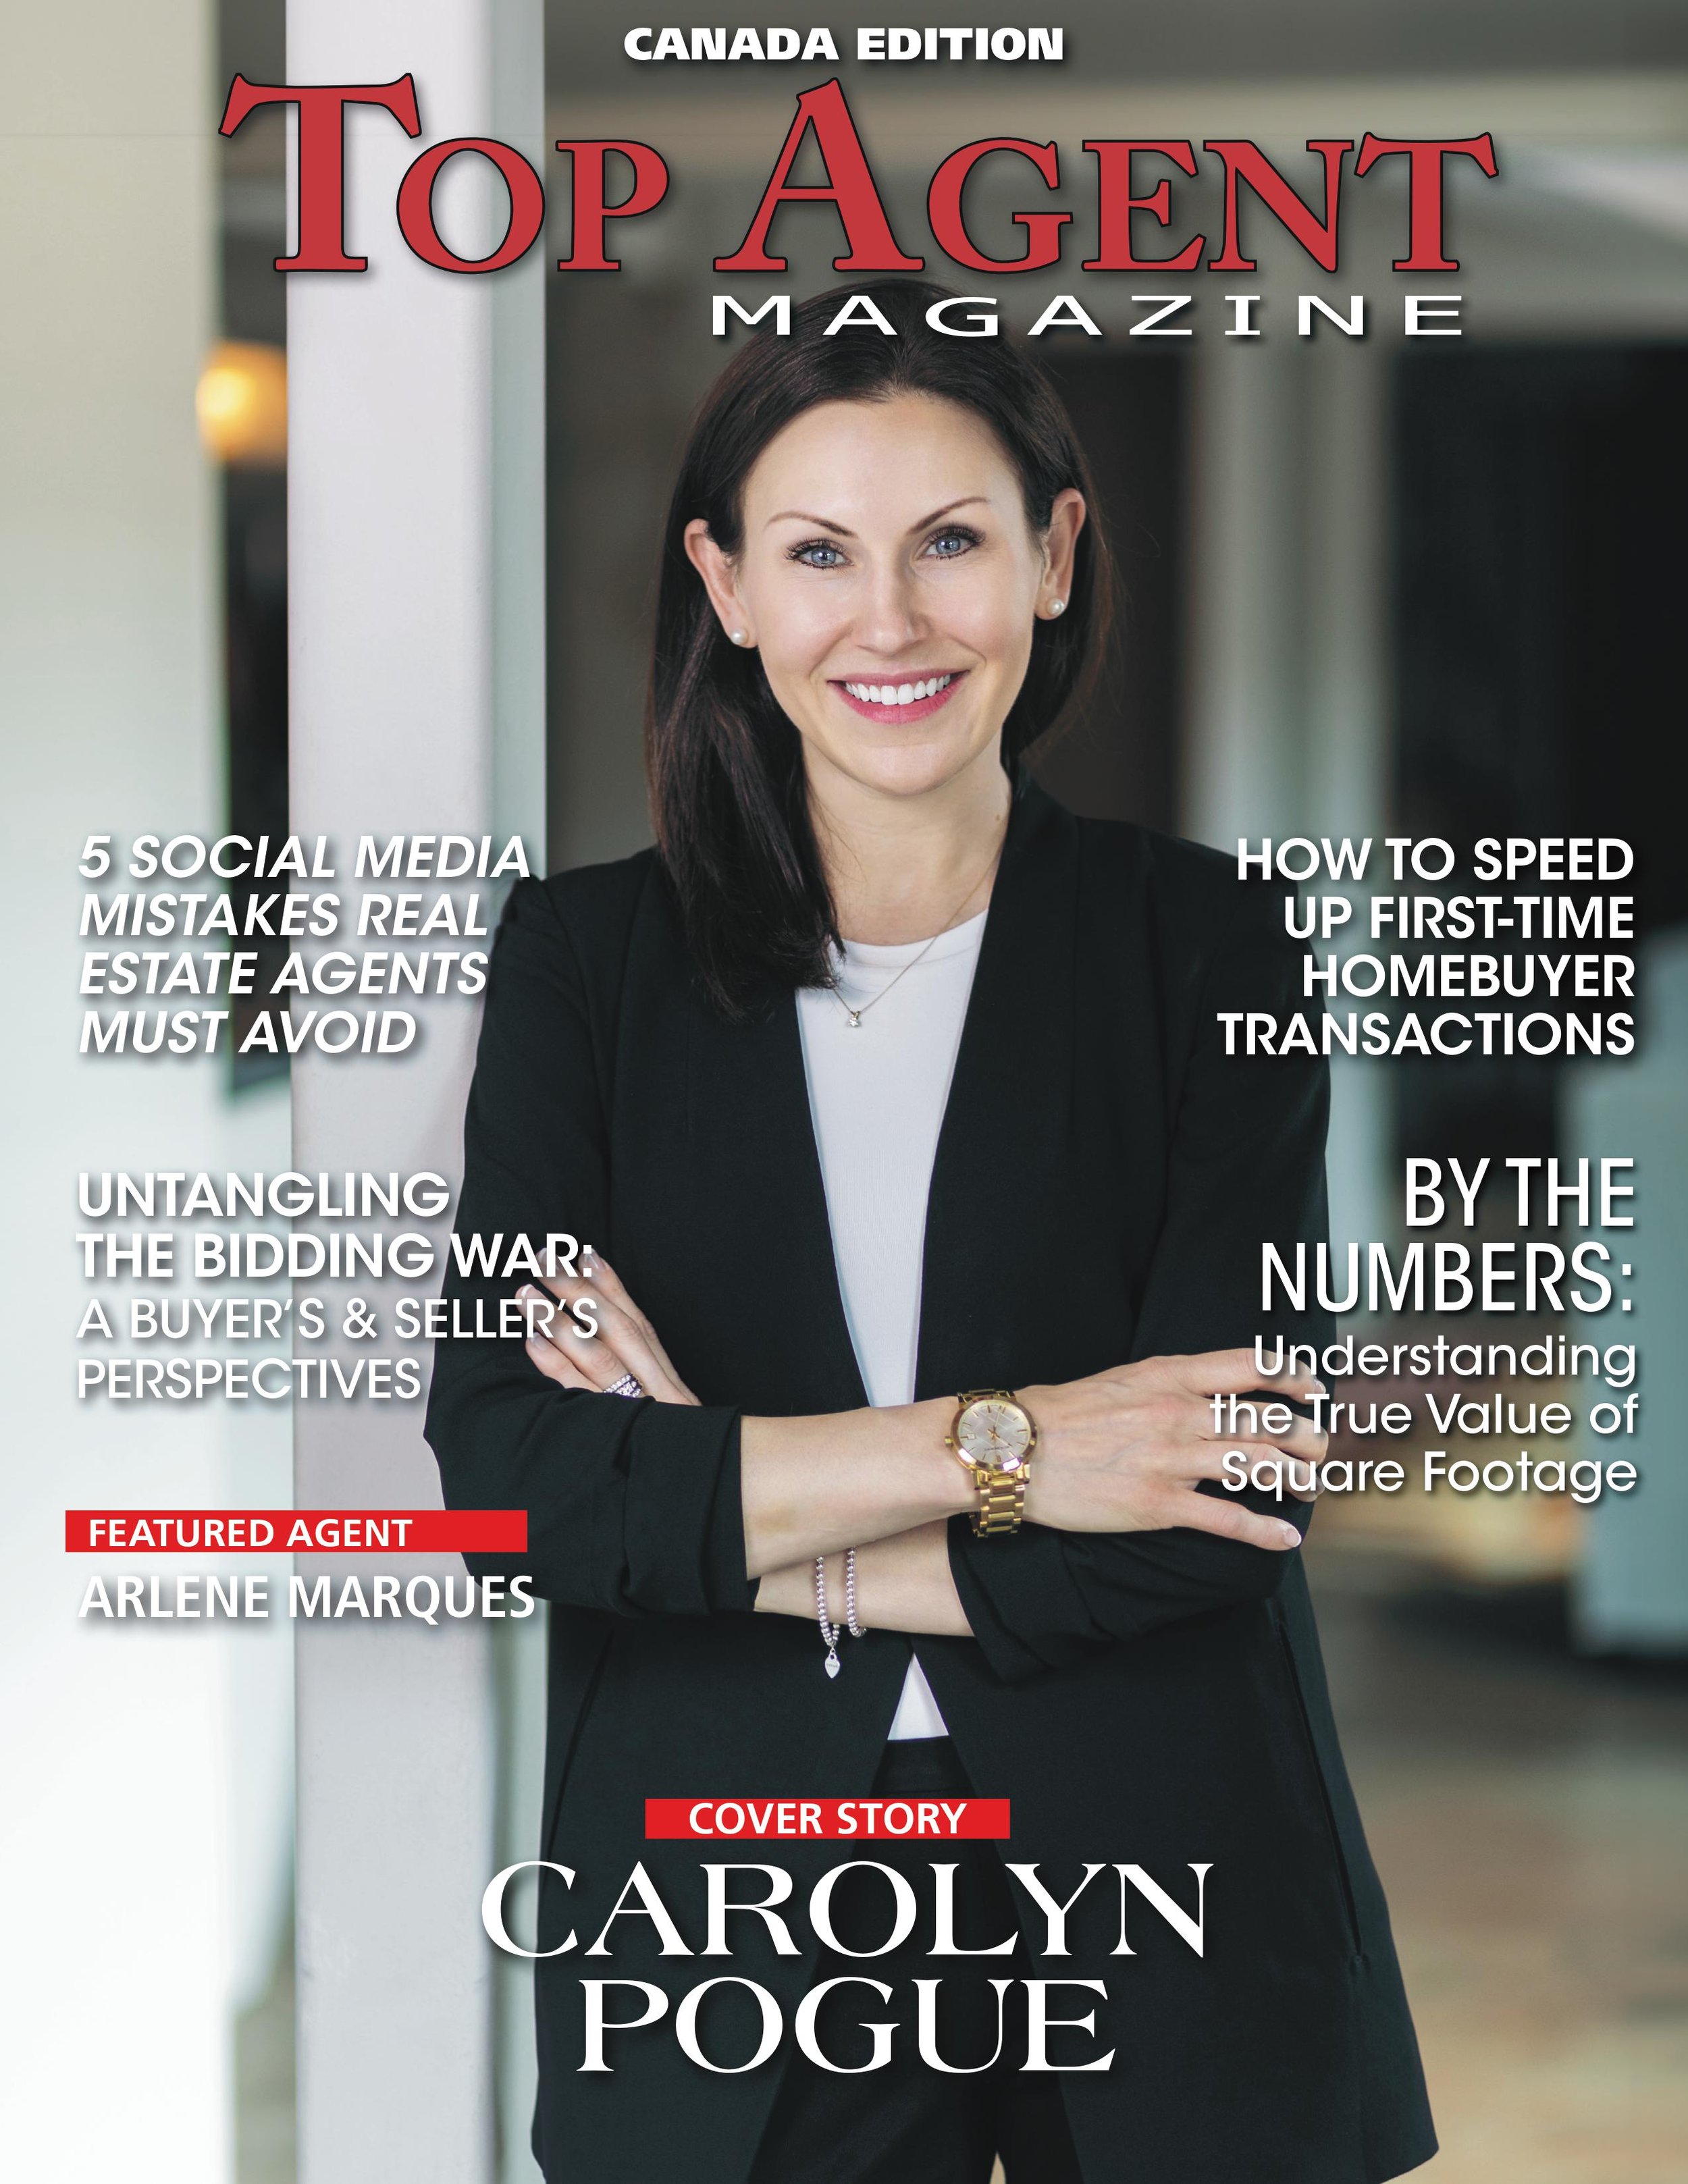 Carolyn-Pogue-Top-Agent-Magazine-Canada-Coquitlam-Realtor-Burke-Mountain-Real-Estate-1.jpg